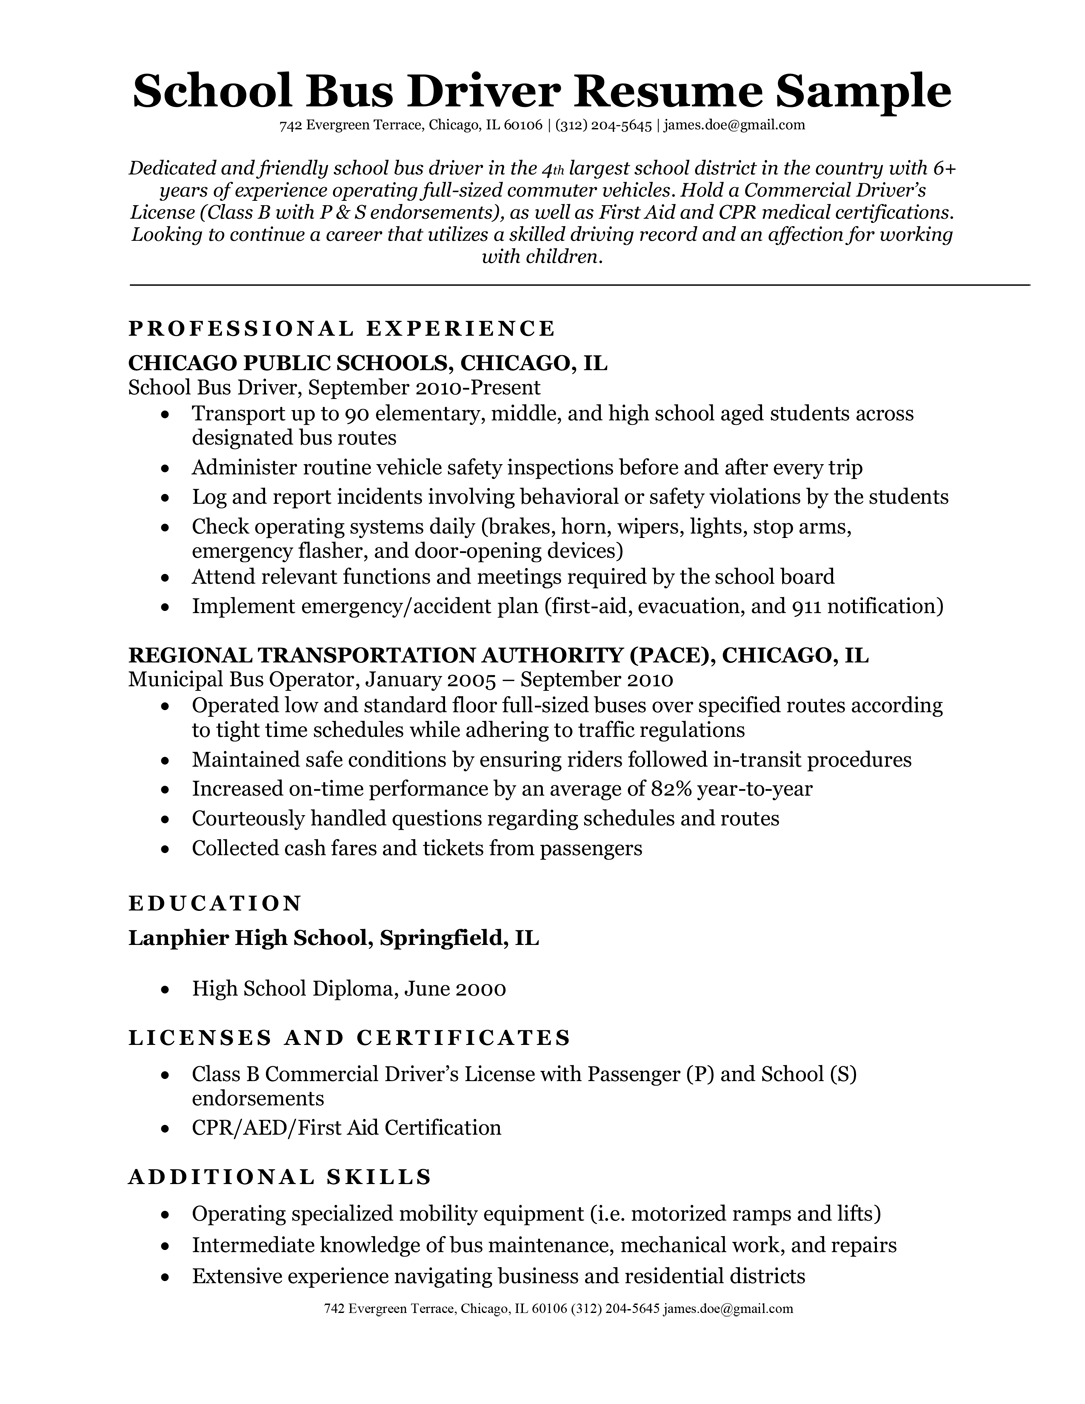 School bus driver resume sample